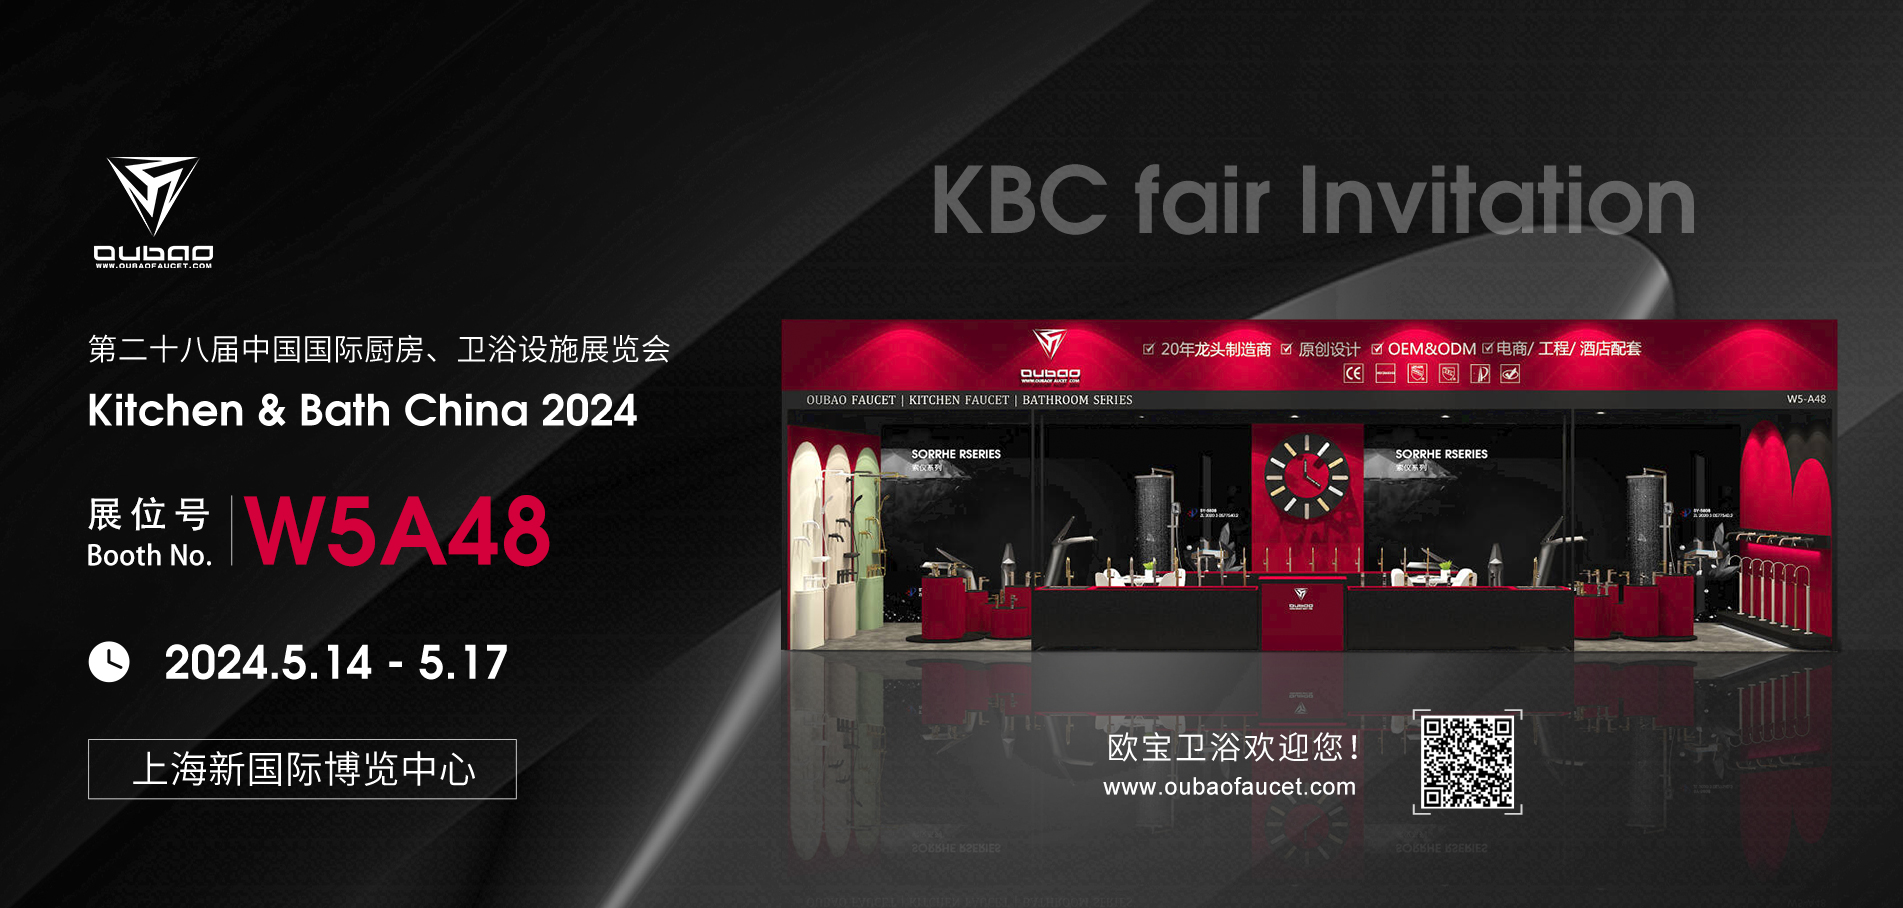 KBC fair invitation